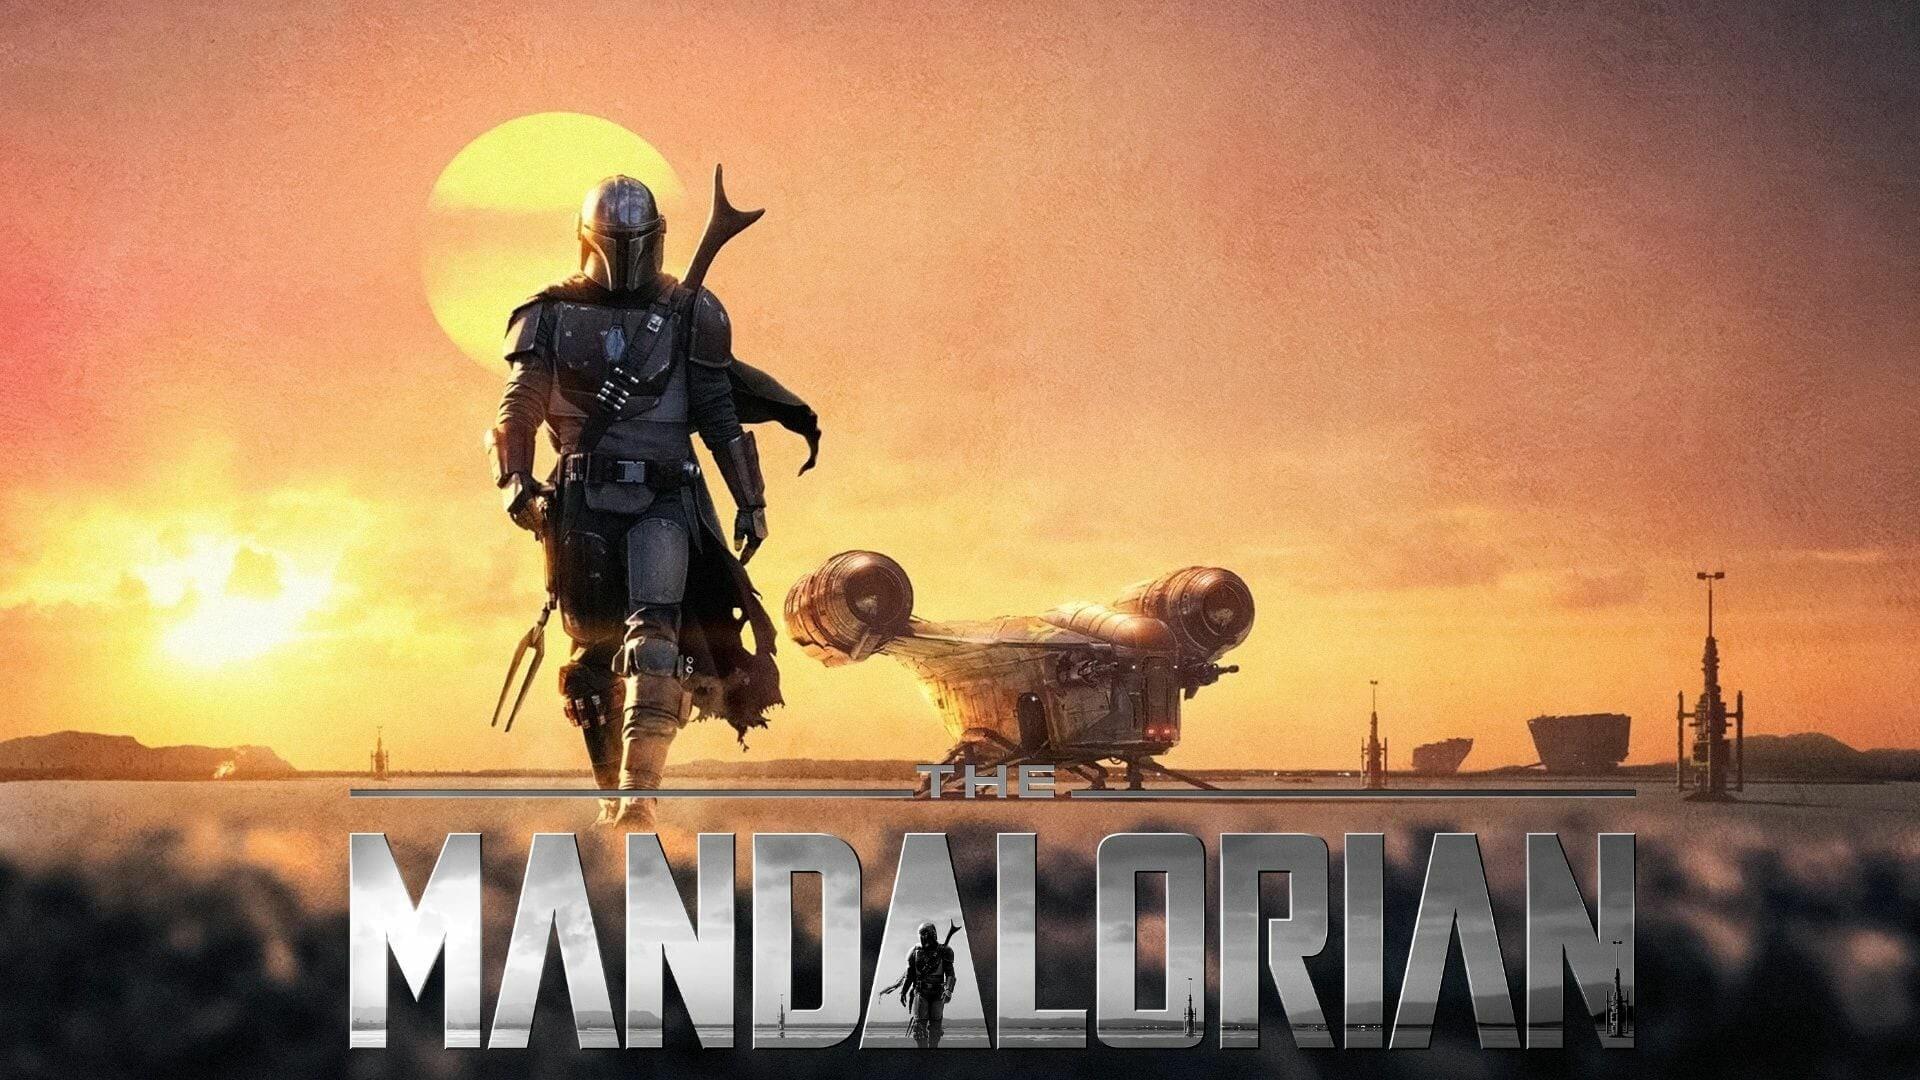 The Mandalorian: Episode 1 Review